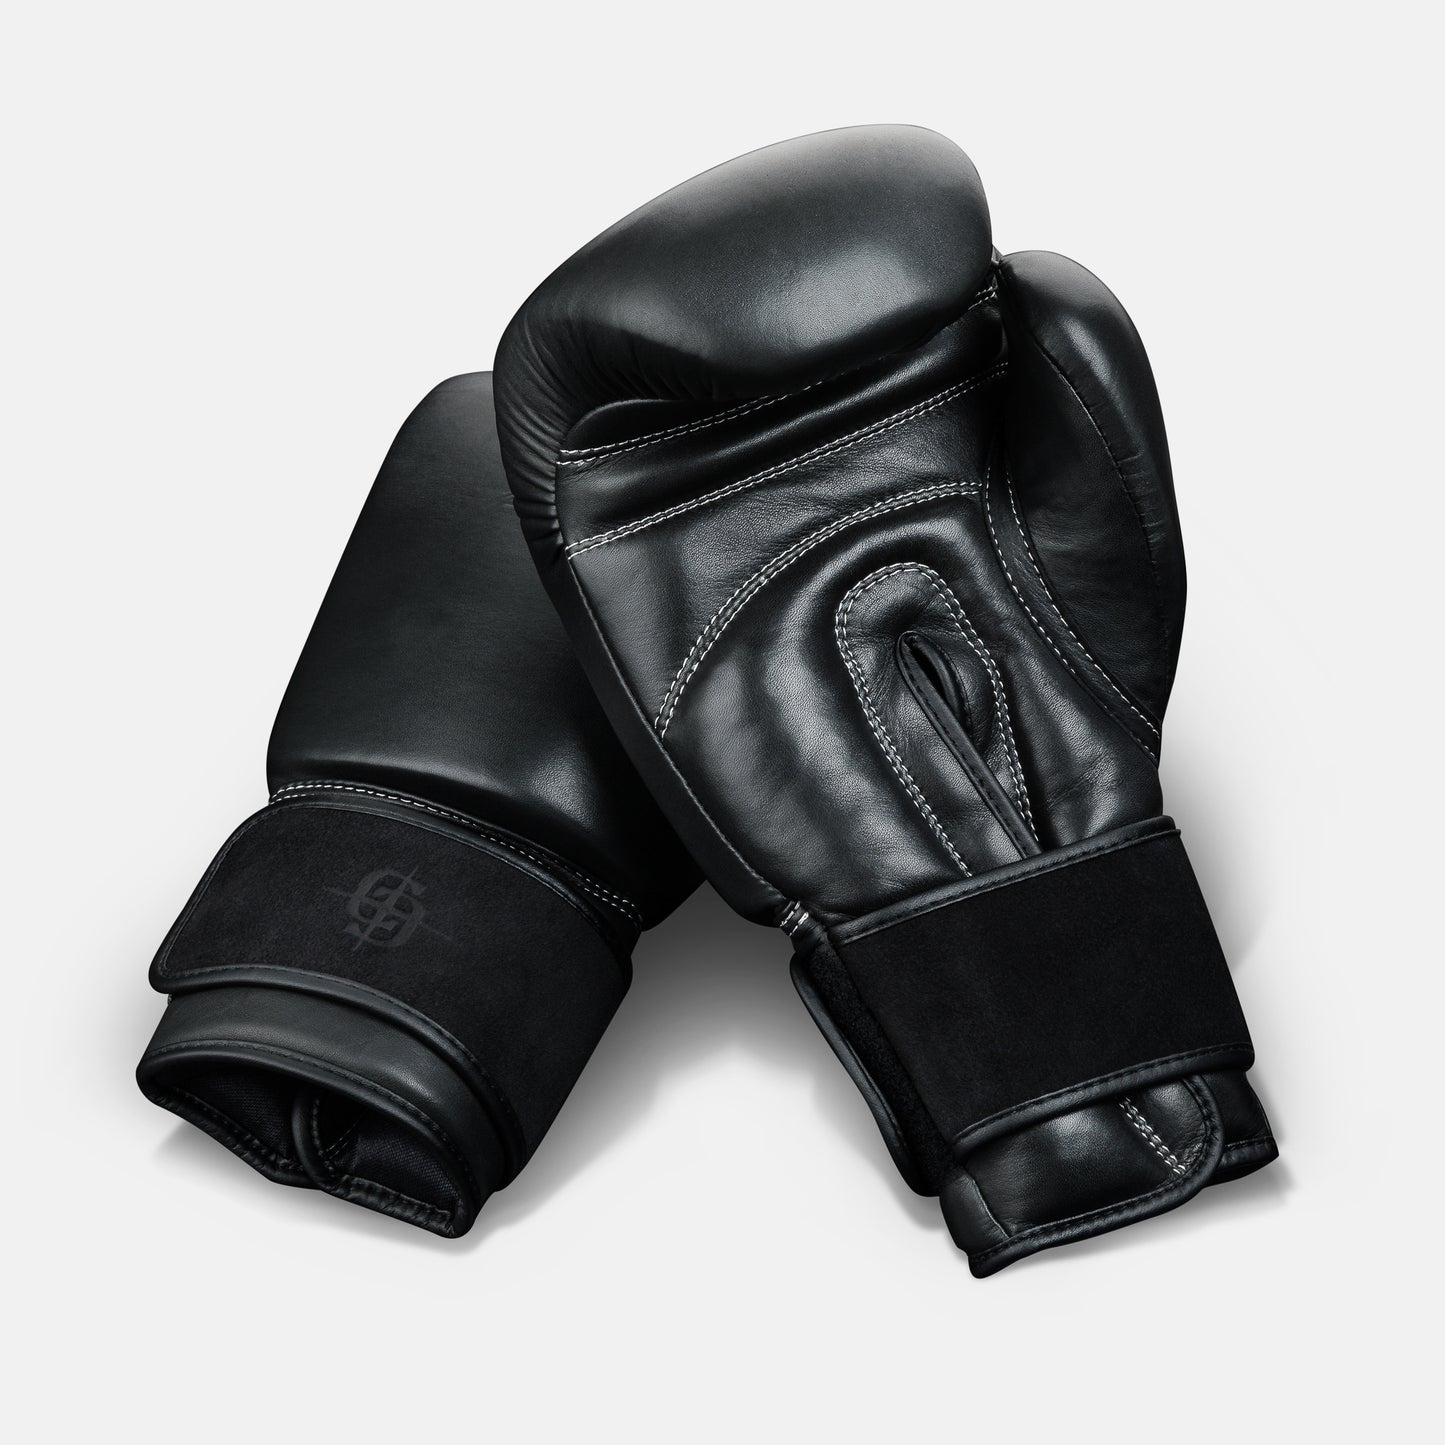 Contender Boxing Glove x M.V.P. (Black)